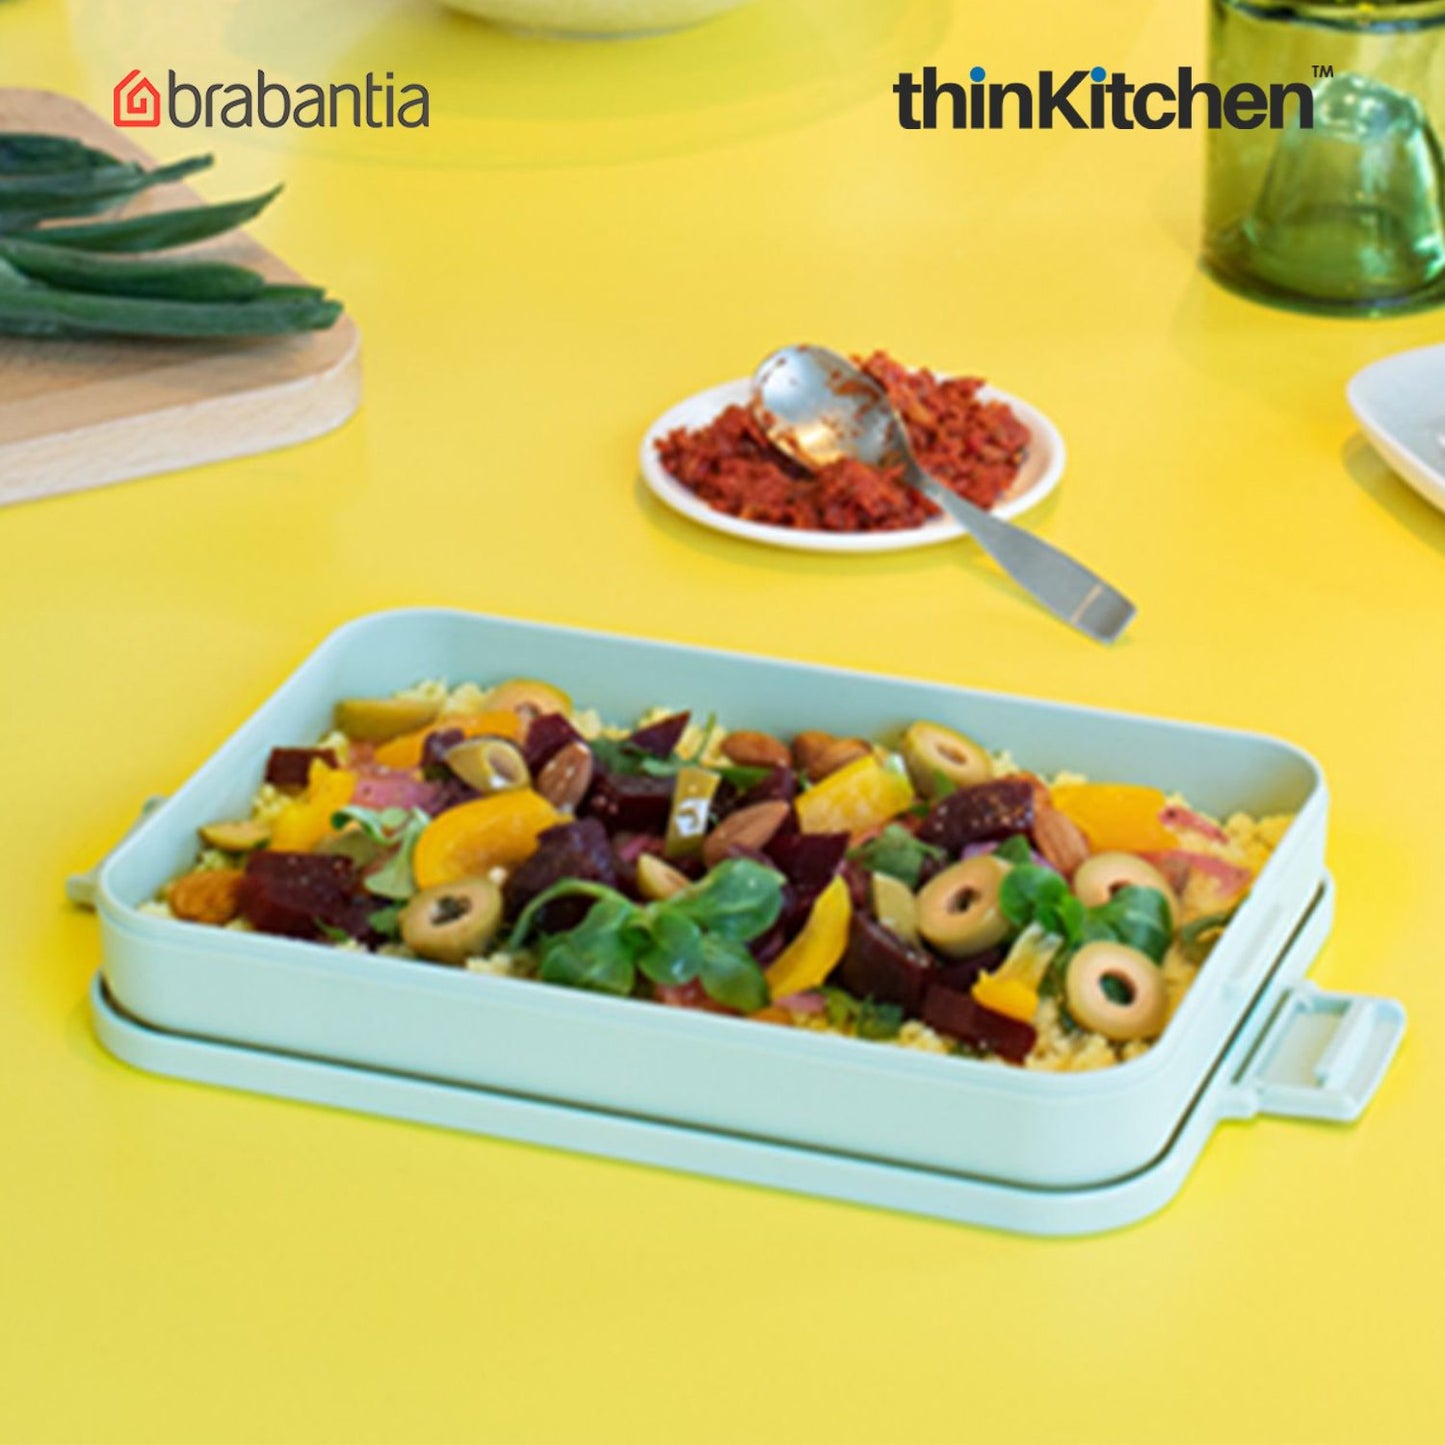 Brabantia Make Take Flat Lunch Box Jade Green